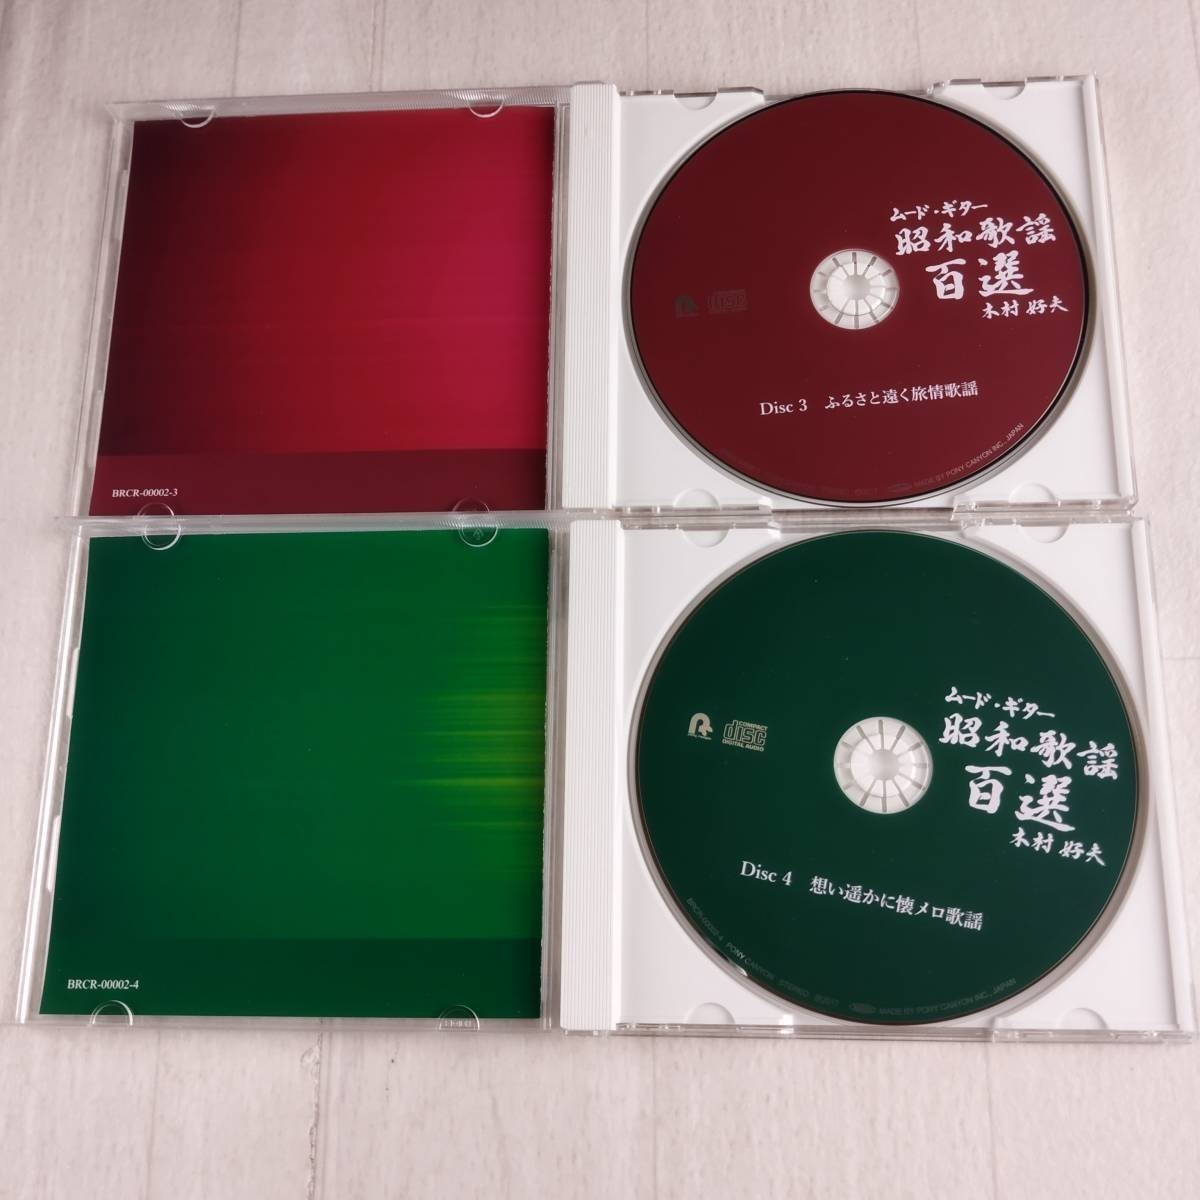 3C3 CD 木村好夫 ムード・ギター昭和歌謡百選_画像6